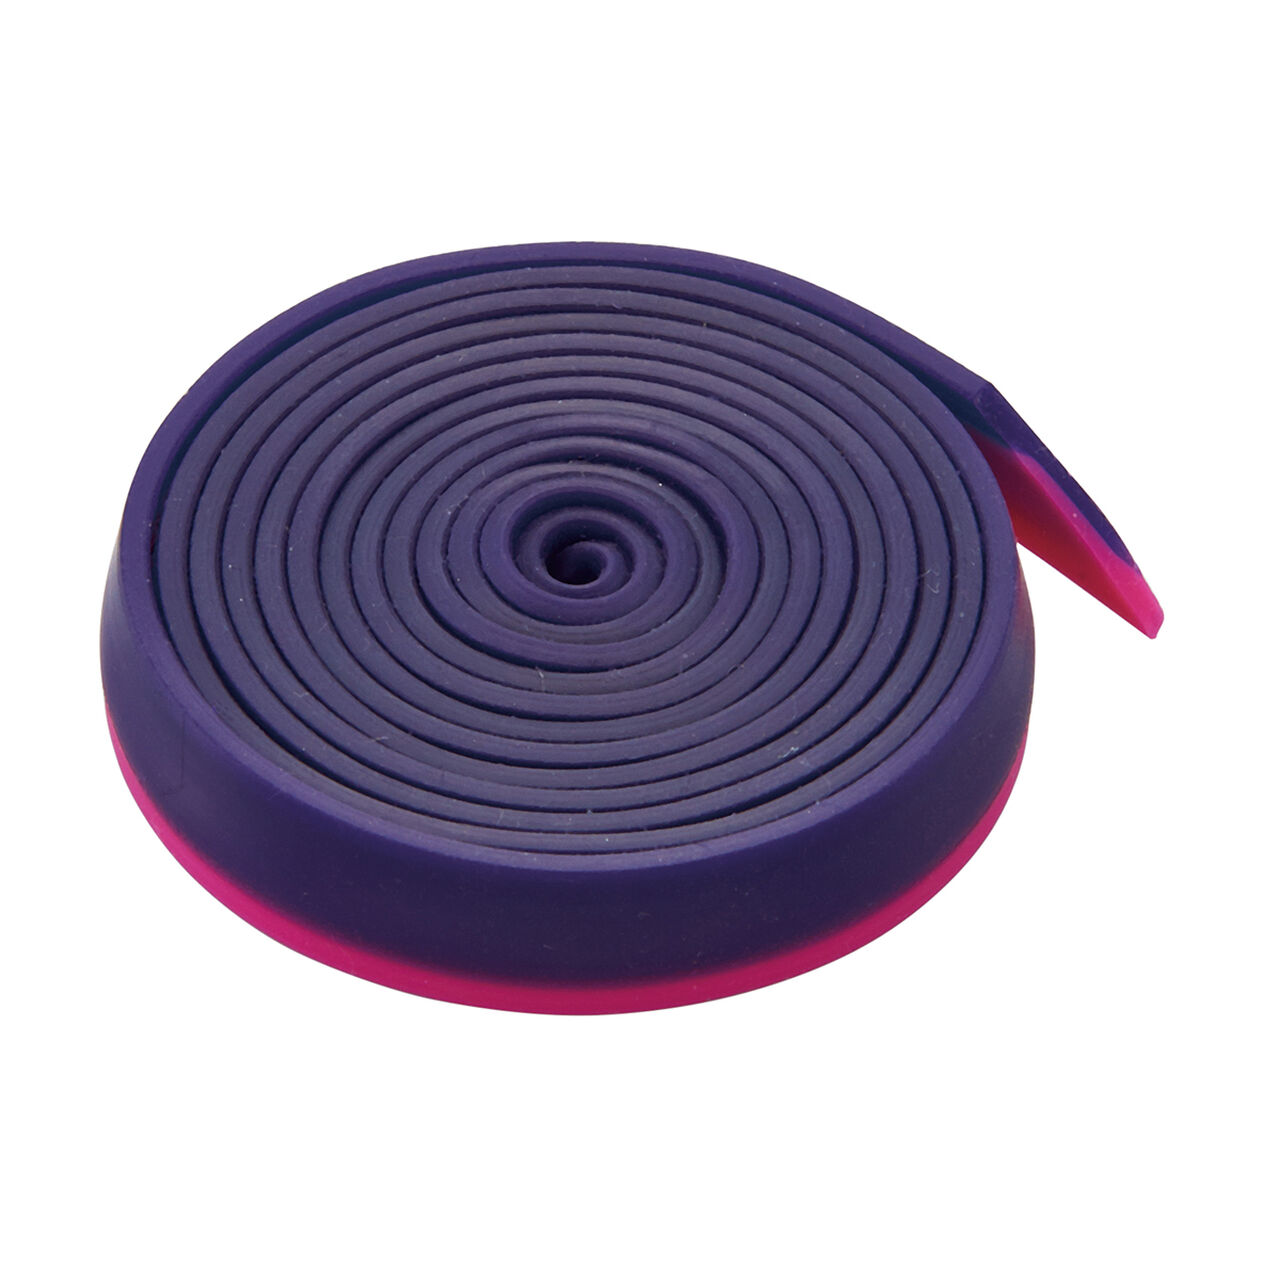 SWANS (速安视) SRB-40 MGVIO 品红色/蓝紫色 游泳镜备用带,Opt10, large image number 0